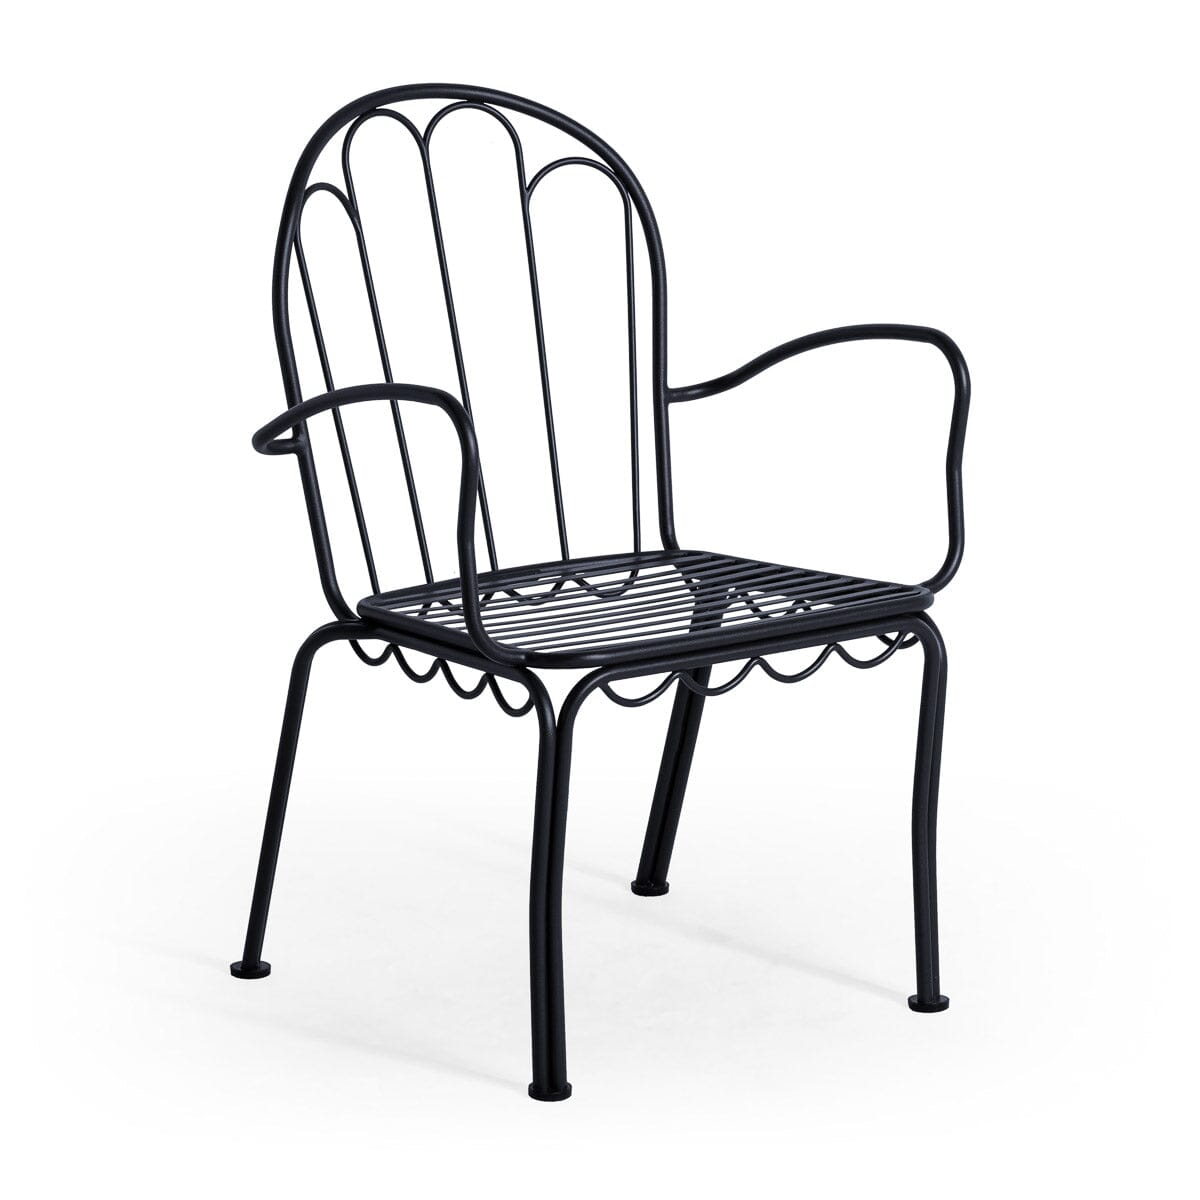 The Al Fresco Dining Chair - Vintage Black Al Fresco Dining Chair Business & Pleasure Co 